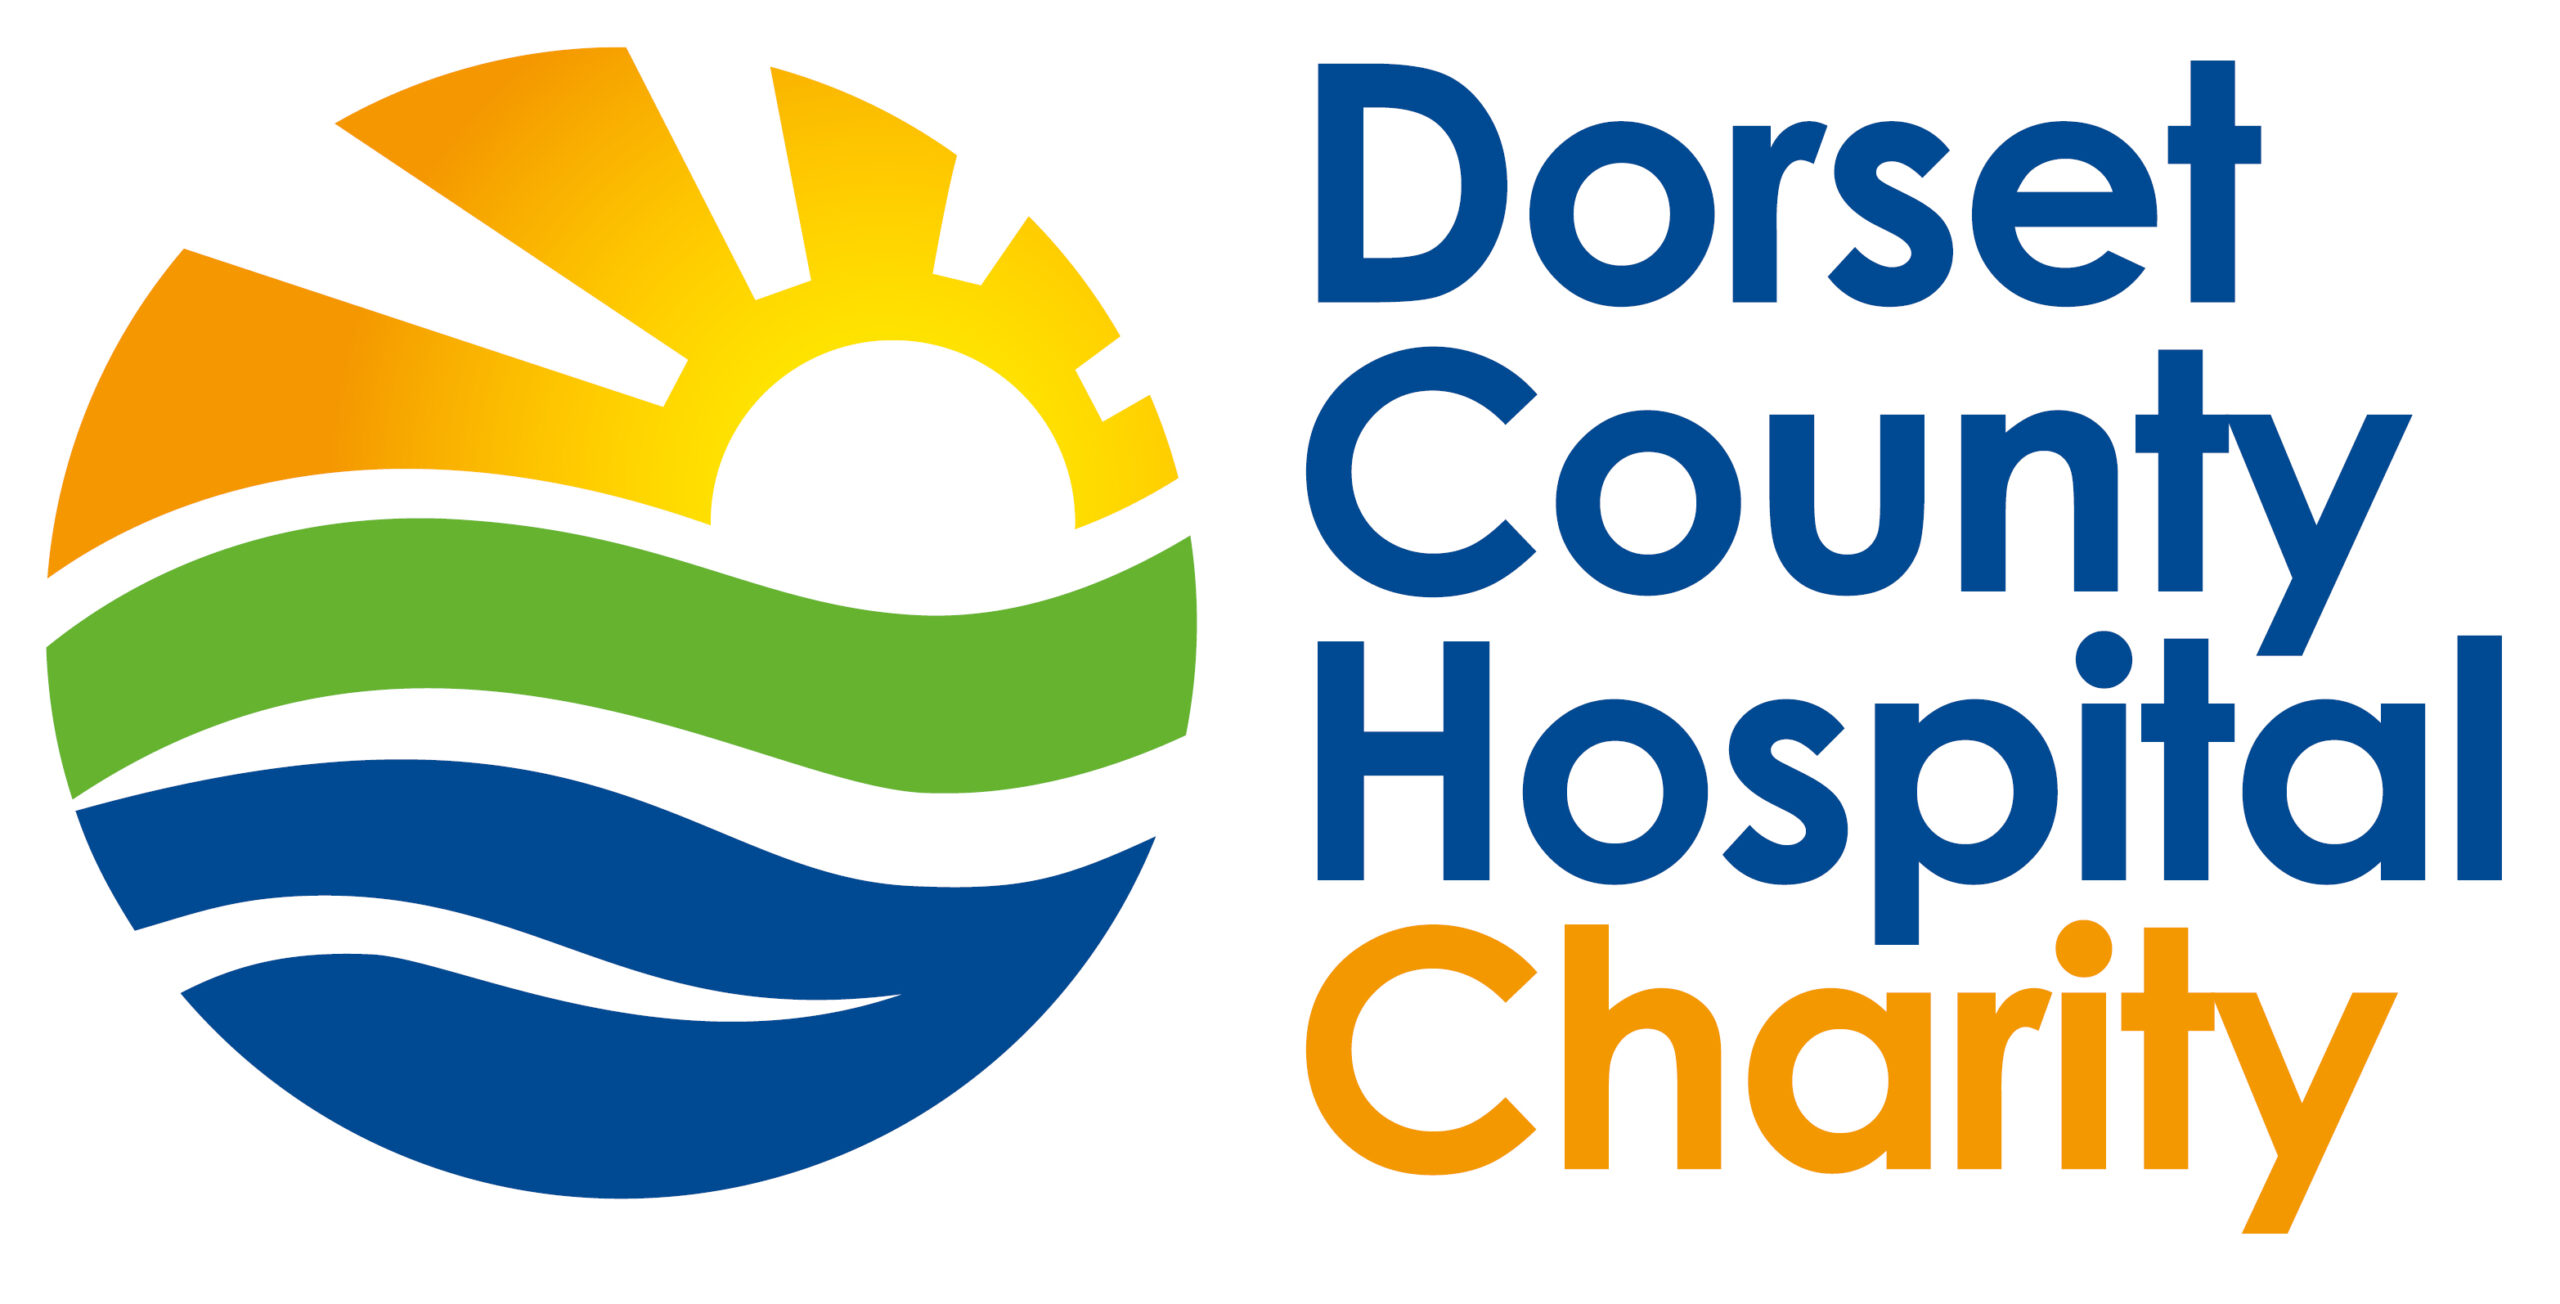 Dorset County Hospital Charity